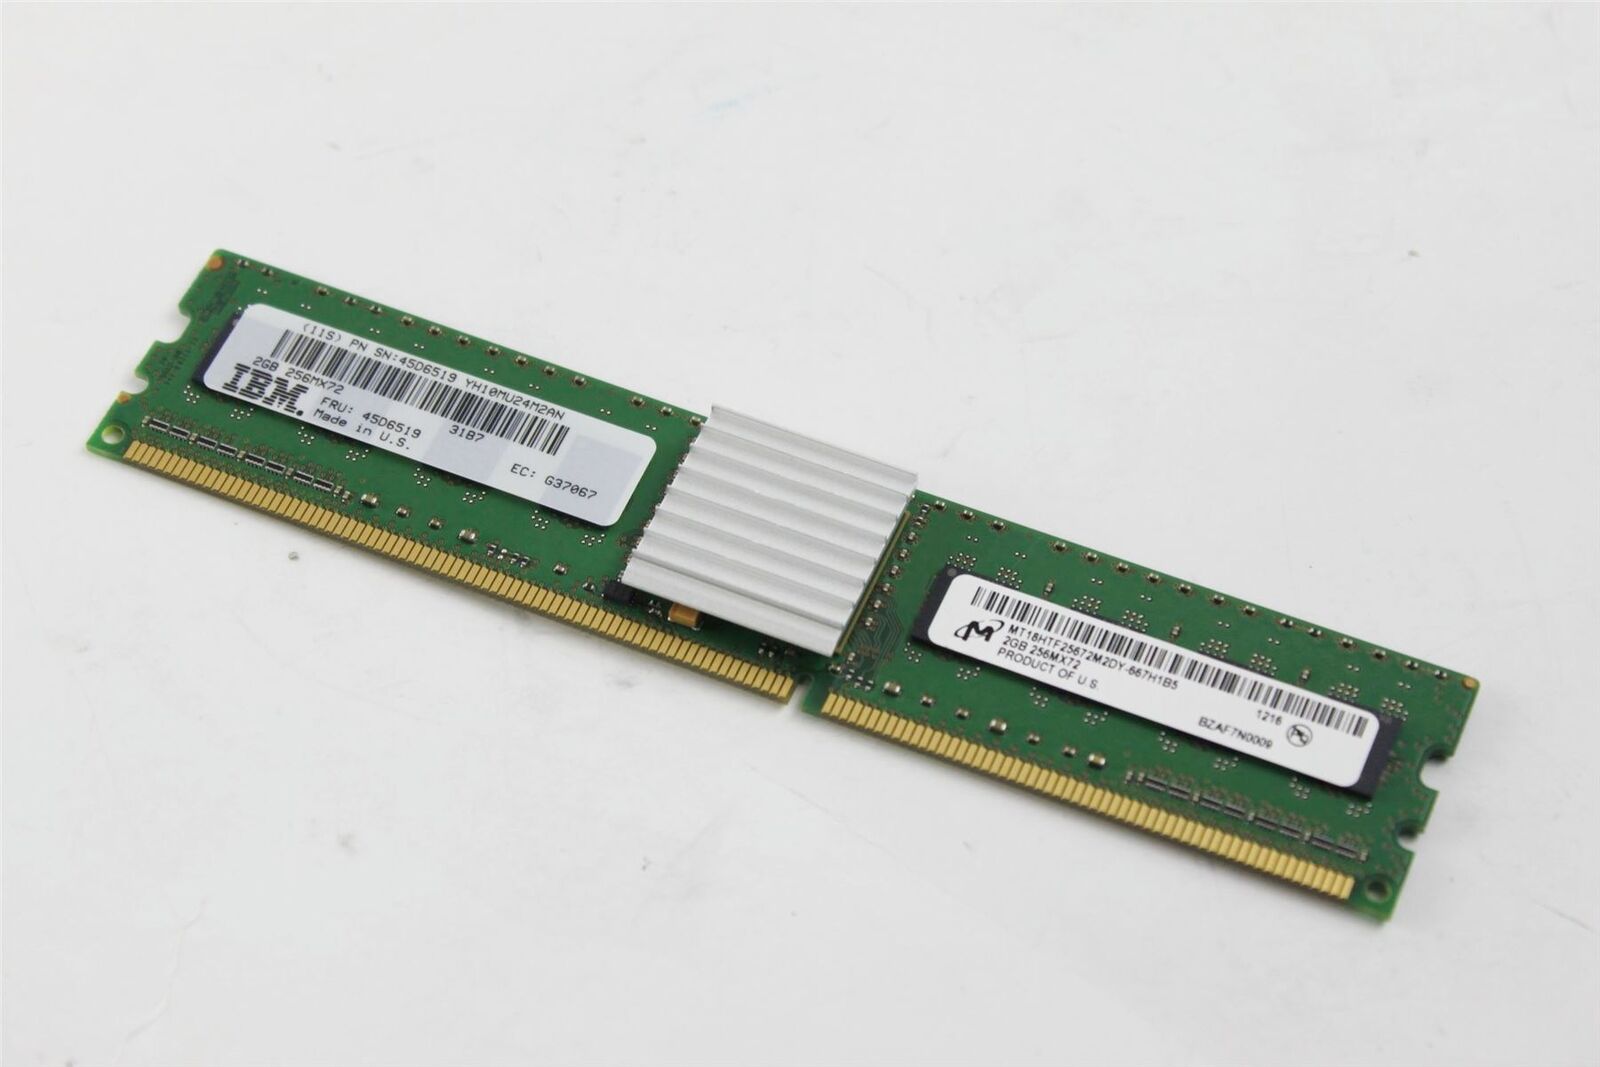 Lot of 16x Genuine IBM 45D6519 2Gb DDR2 Memory DIMM 667MHz Power6 CCIN 31B7 yz